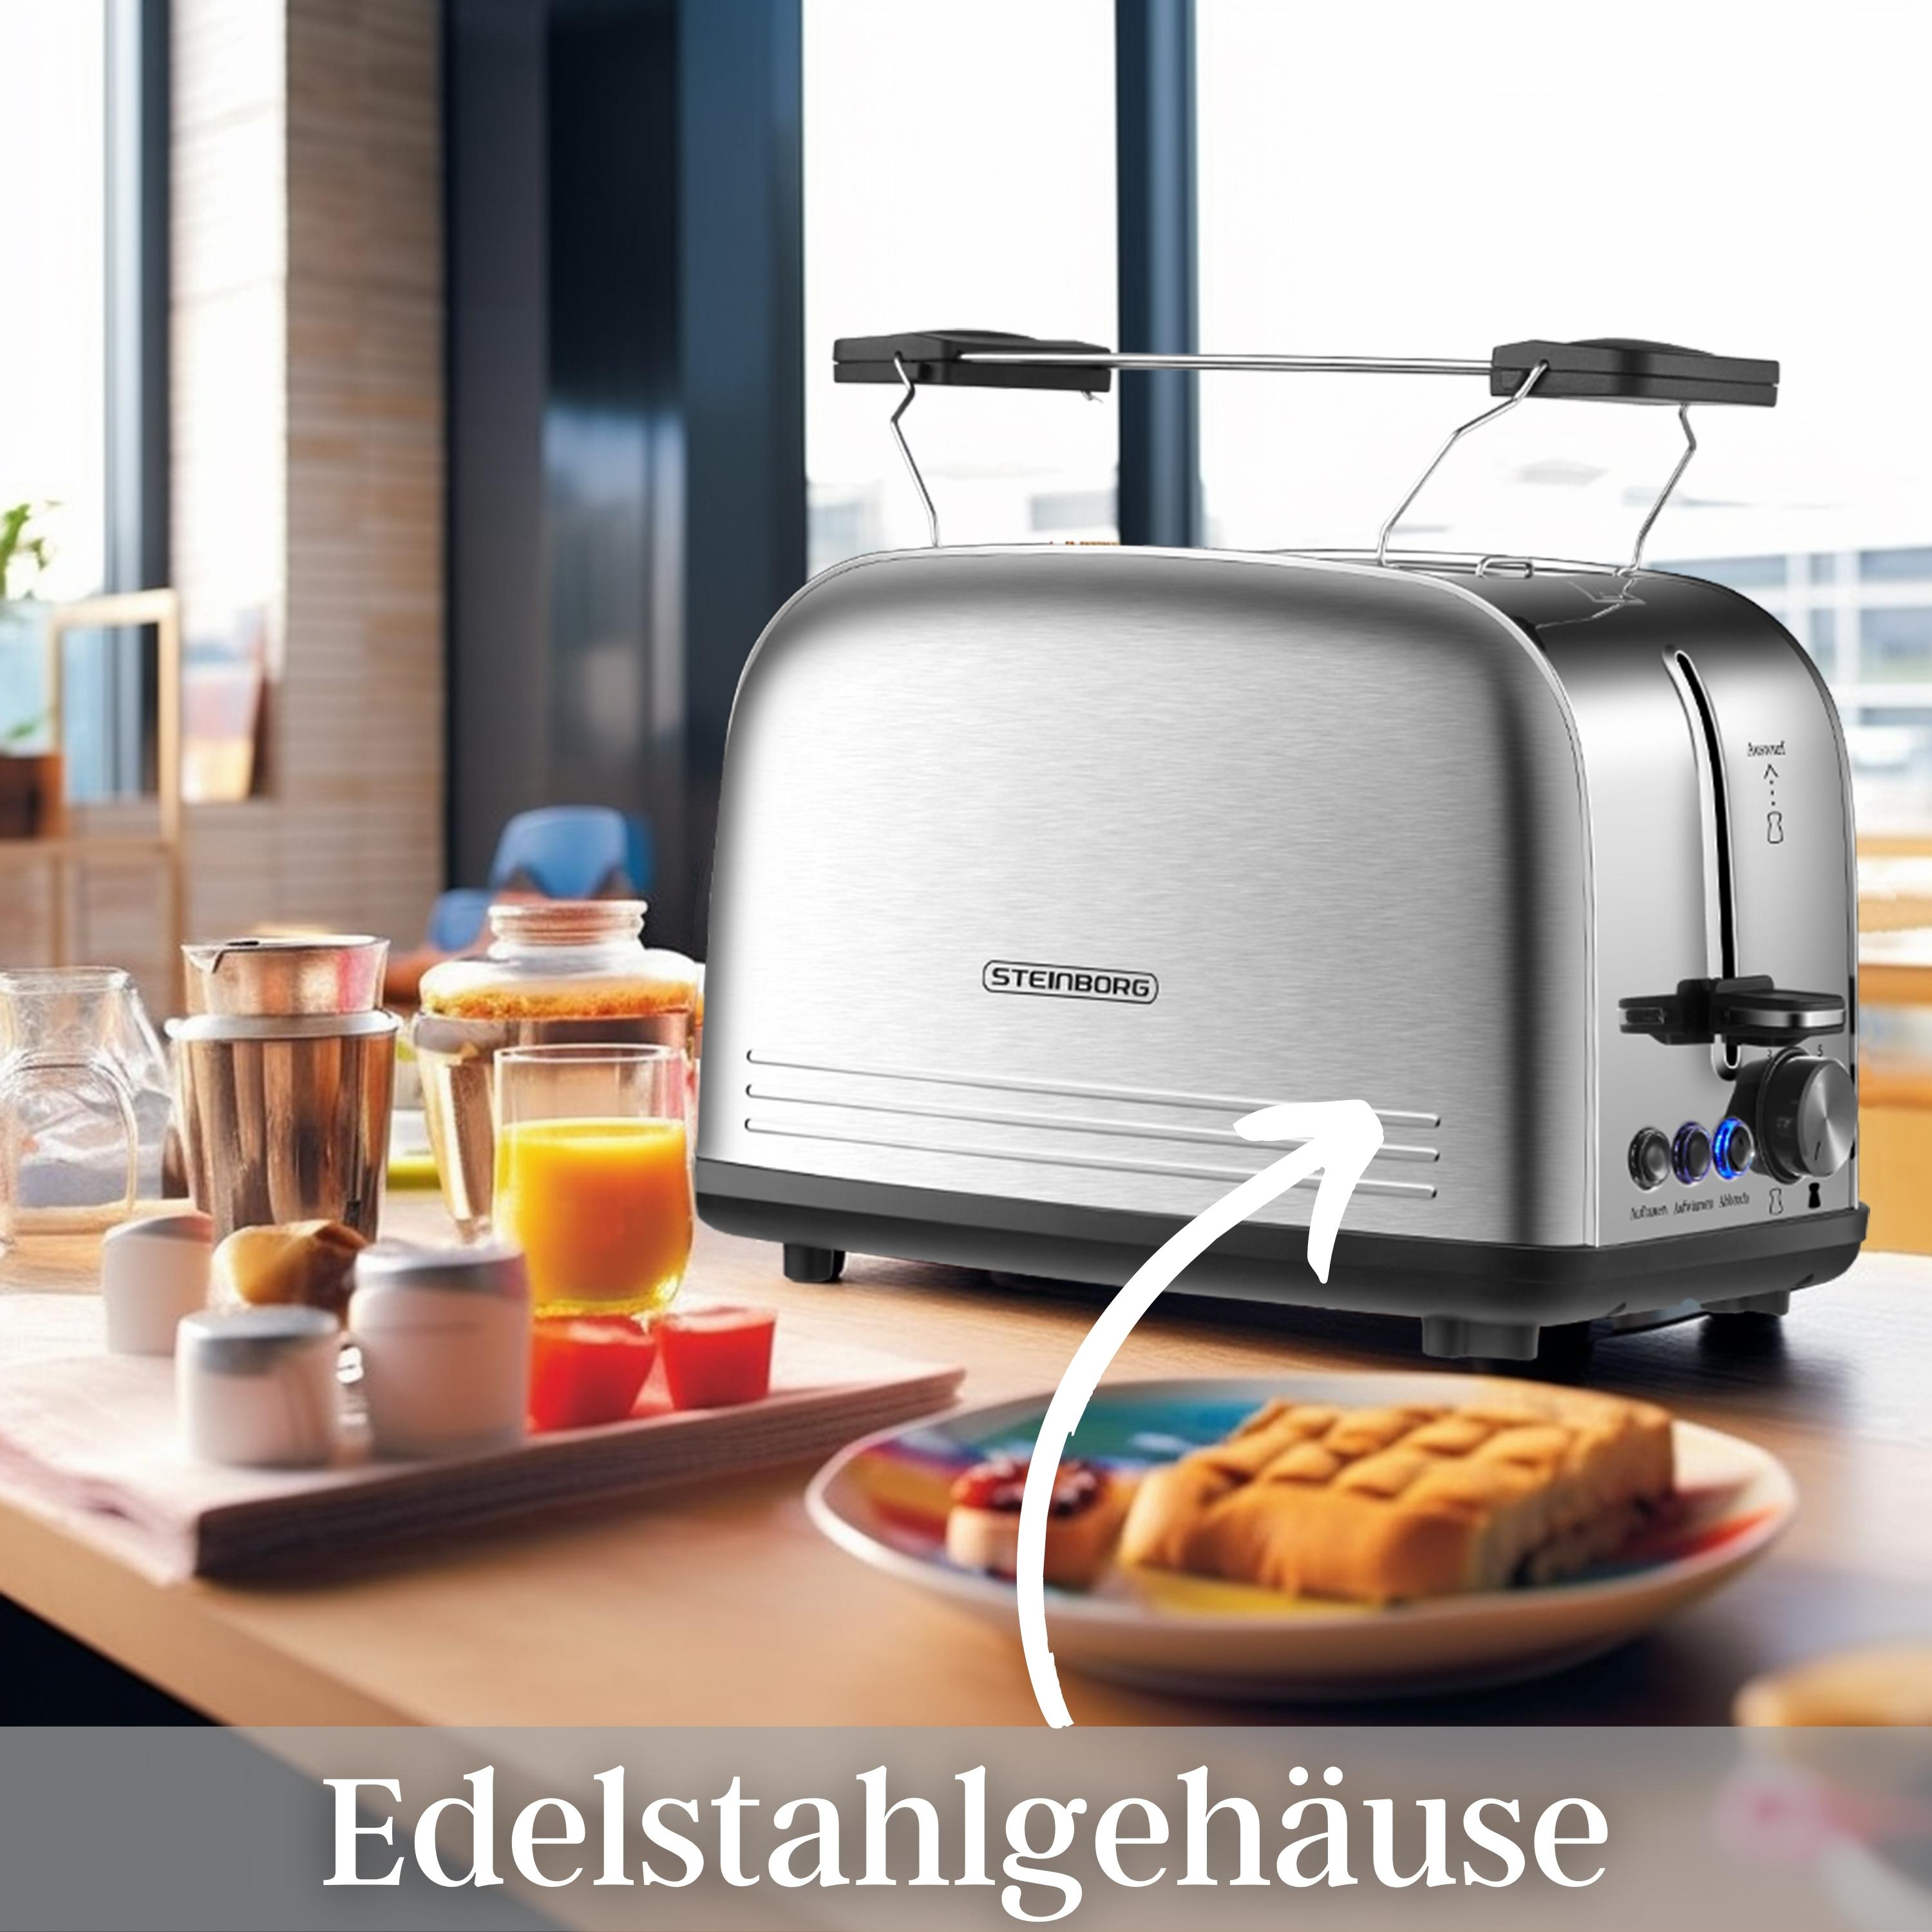 Schlitze: SB-2071 (850 2) Watt, STEINBORG Edelstahl Toaster